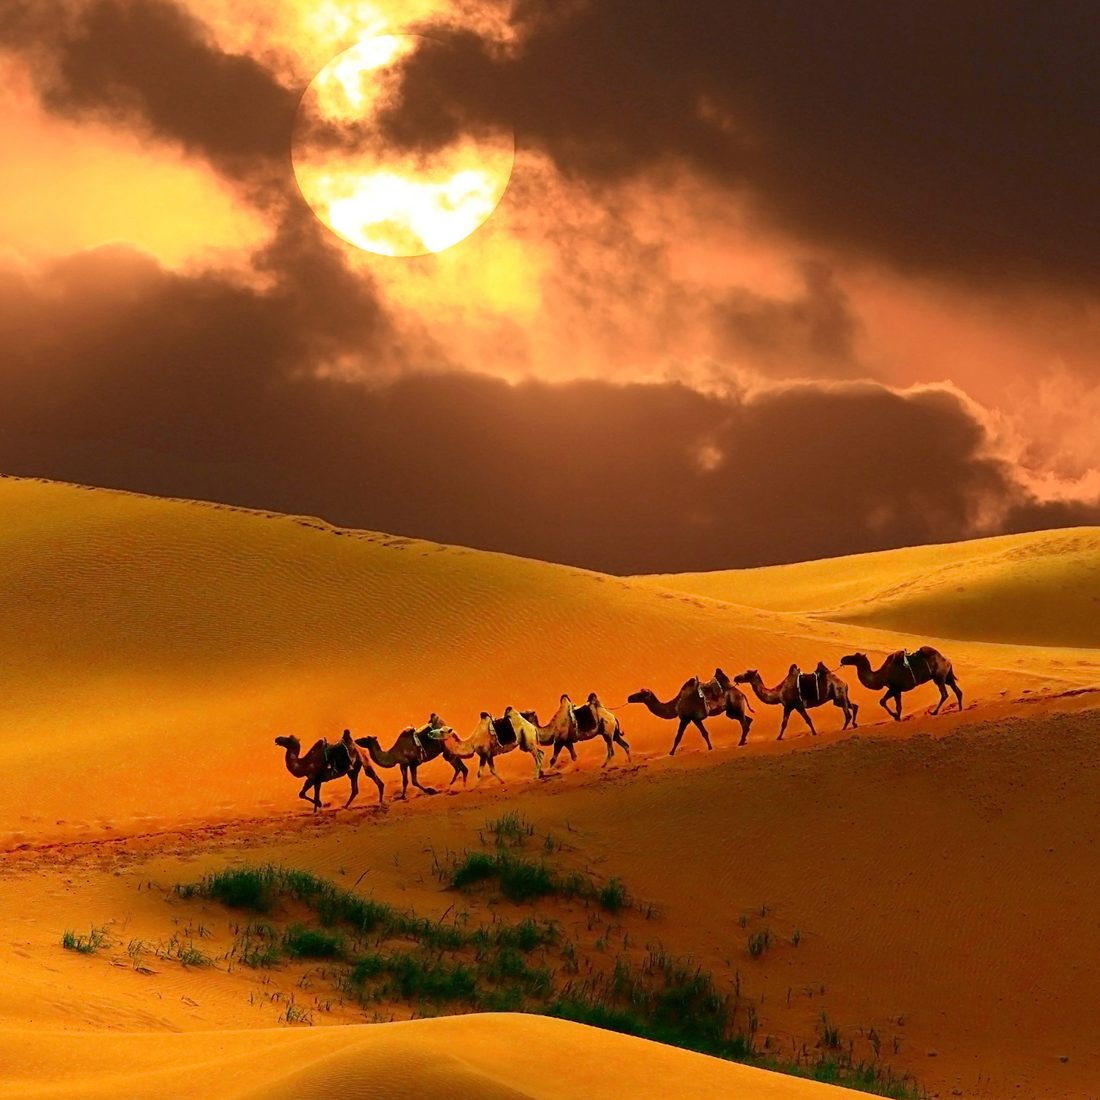 Caravan in the desert, Mongolia